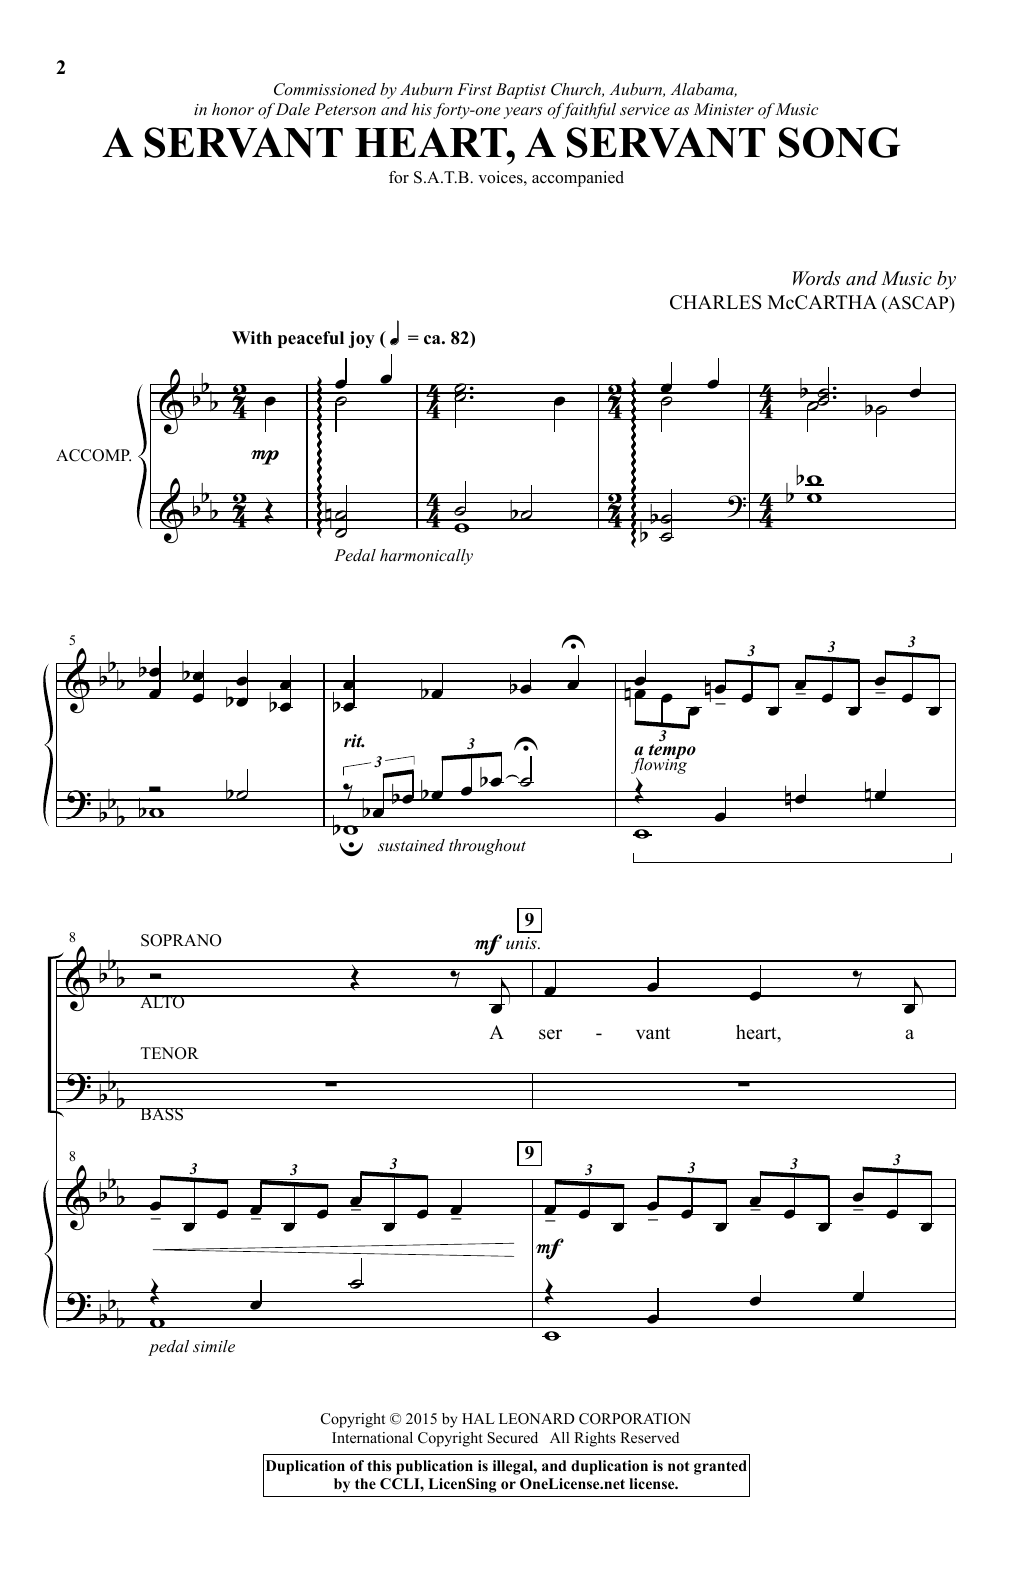 Charles McCartha A Servant Heart, A Servant Song Sheet Music Notes & Chords for SATB - Download or Print PDF